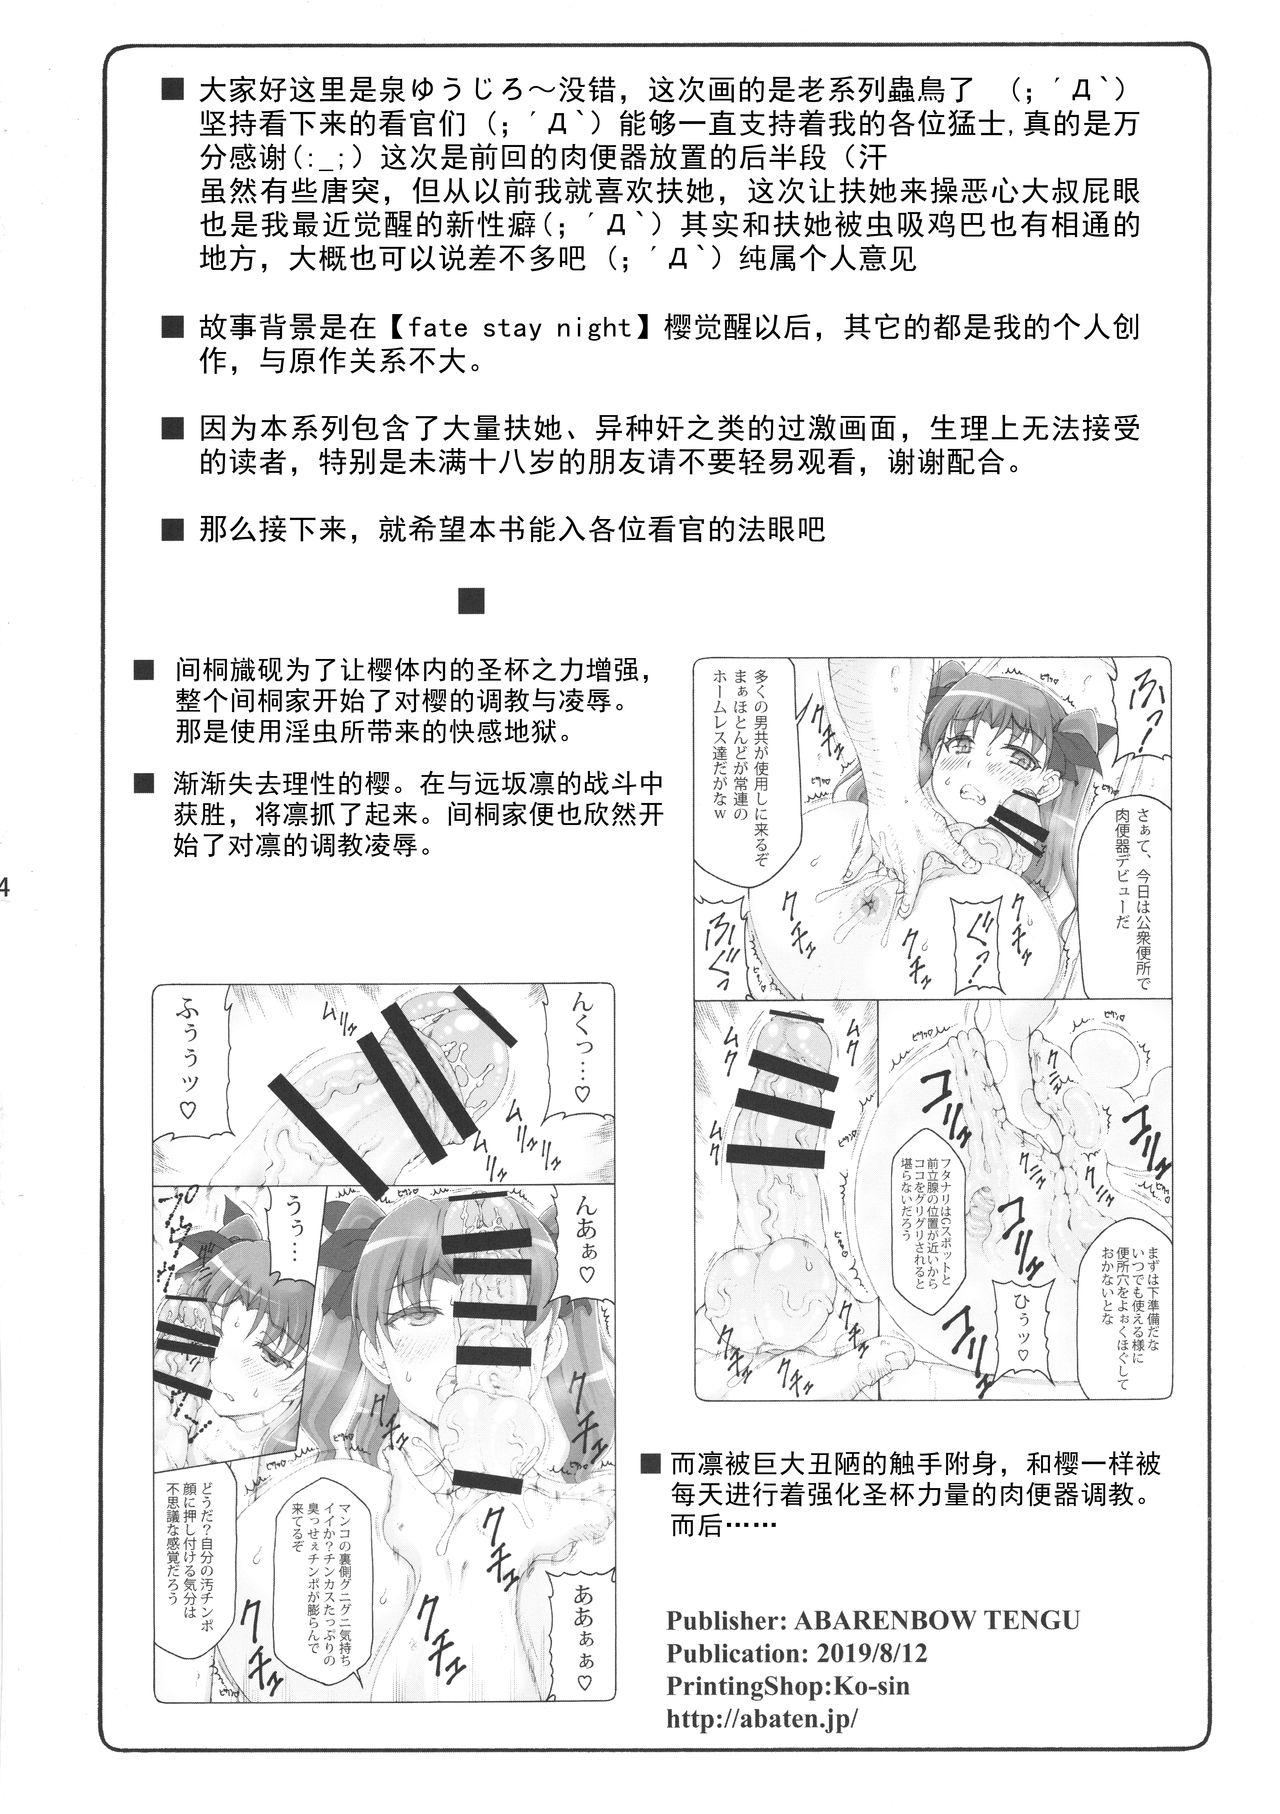 Chibola Kotori 16 - Fate stay night Perfect Body - Page 4